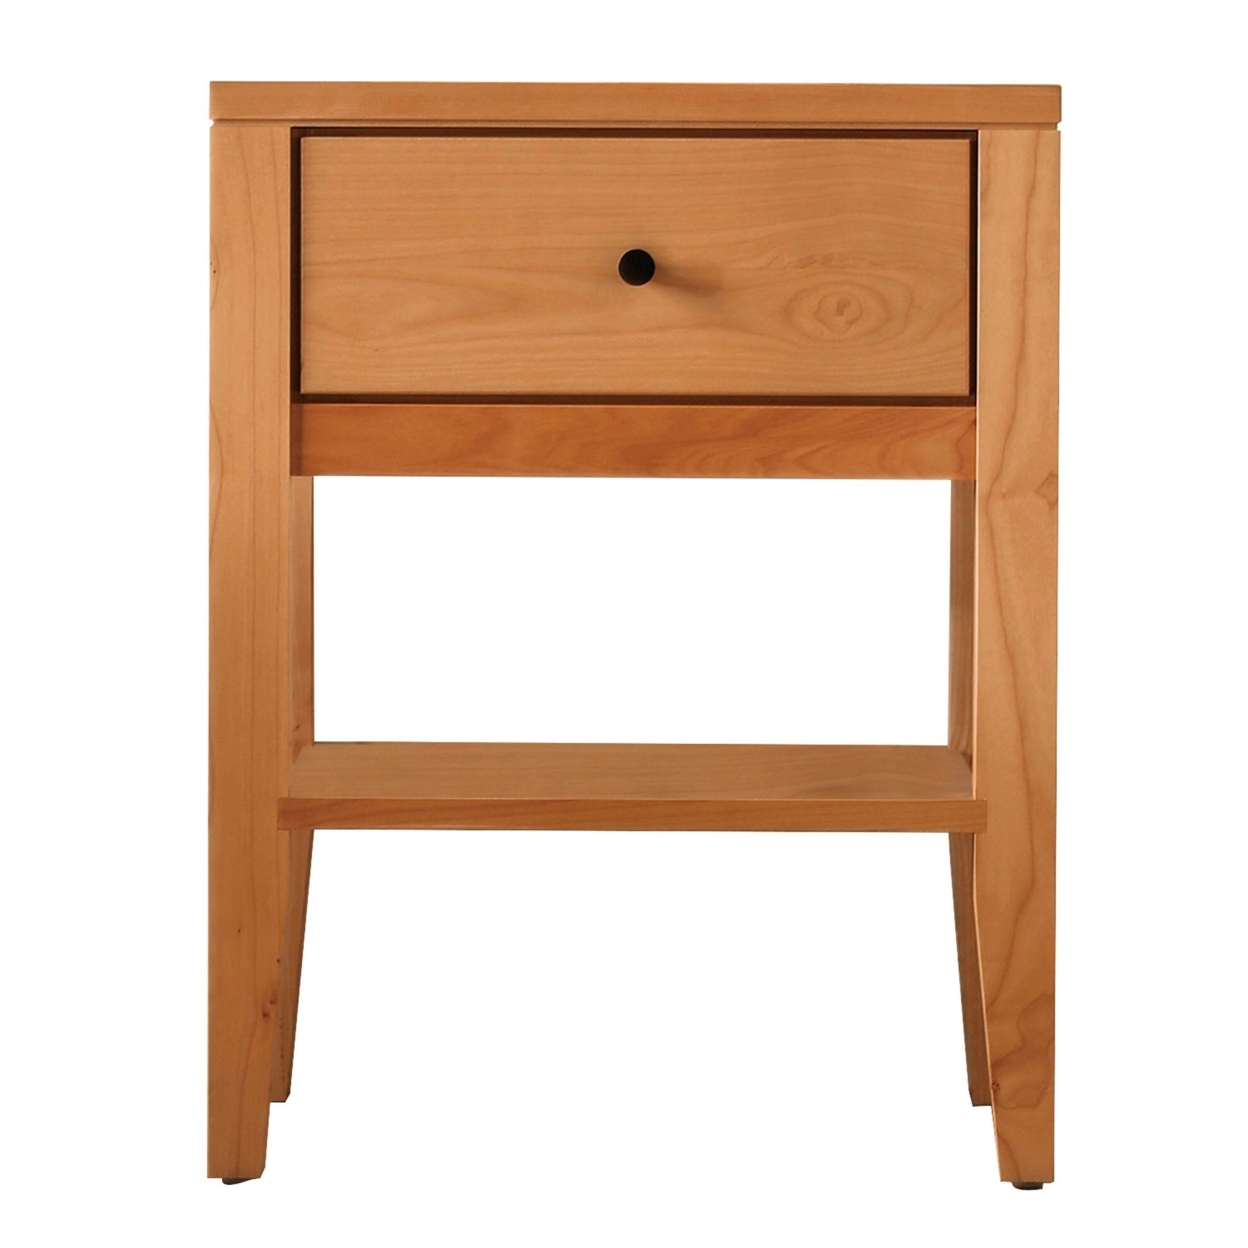 Mid Century Modern Wooden 1 Drawer Nightstand With Shelf, Light Oak Brown- Saltoro Sherpi